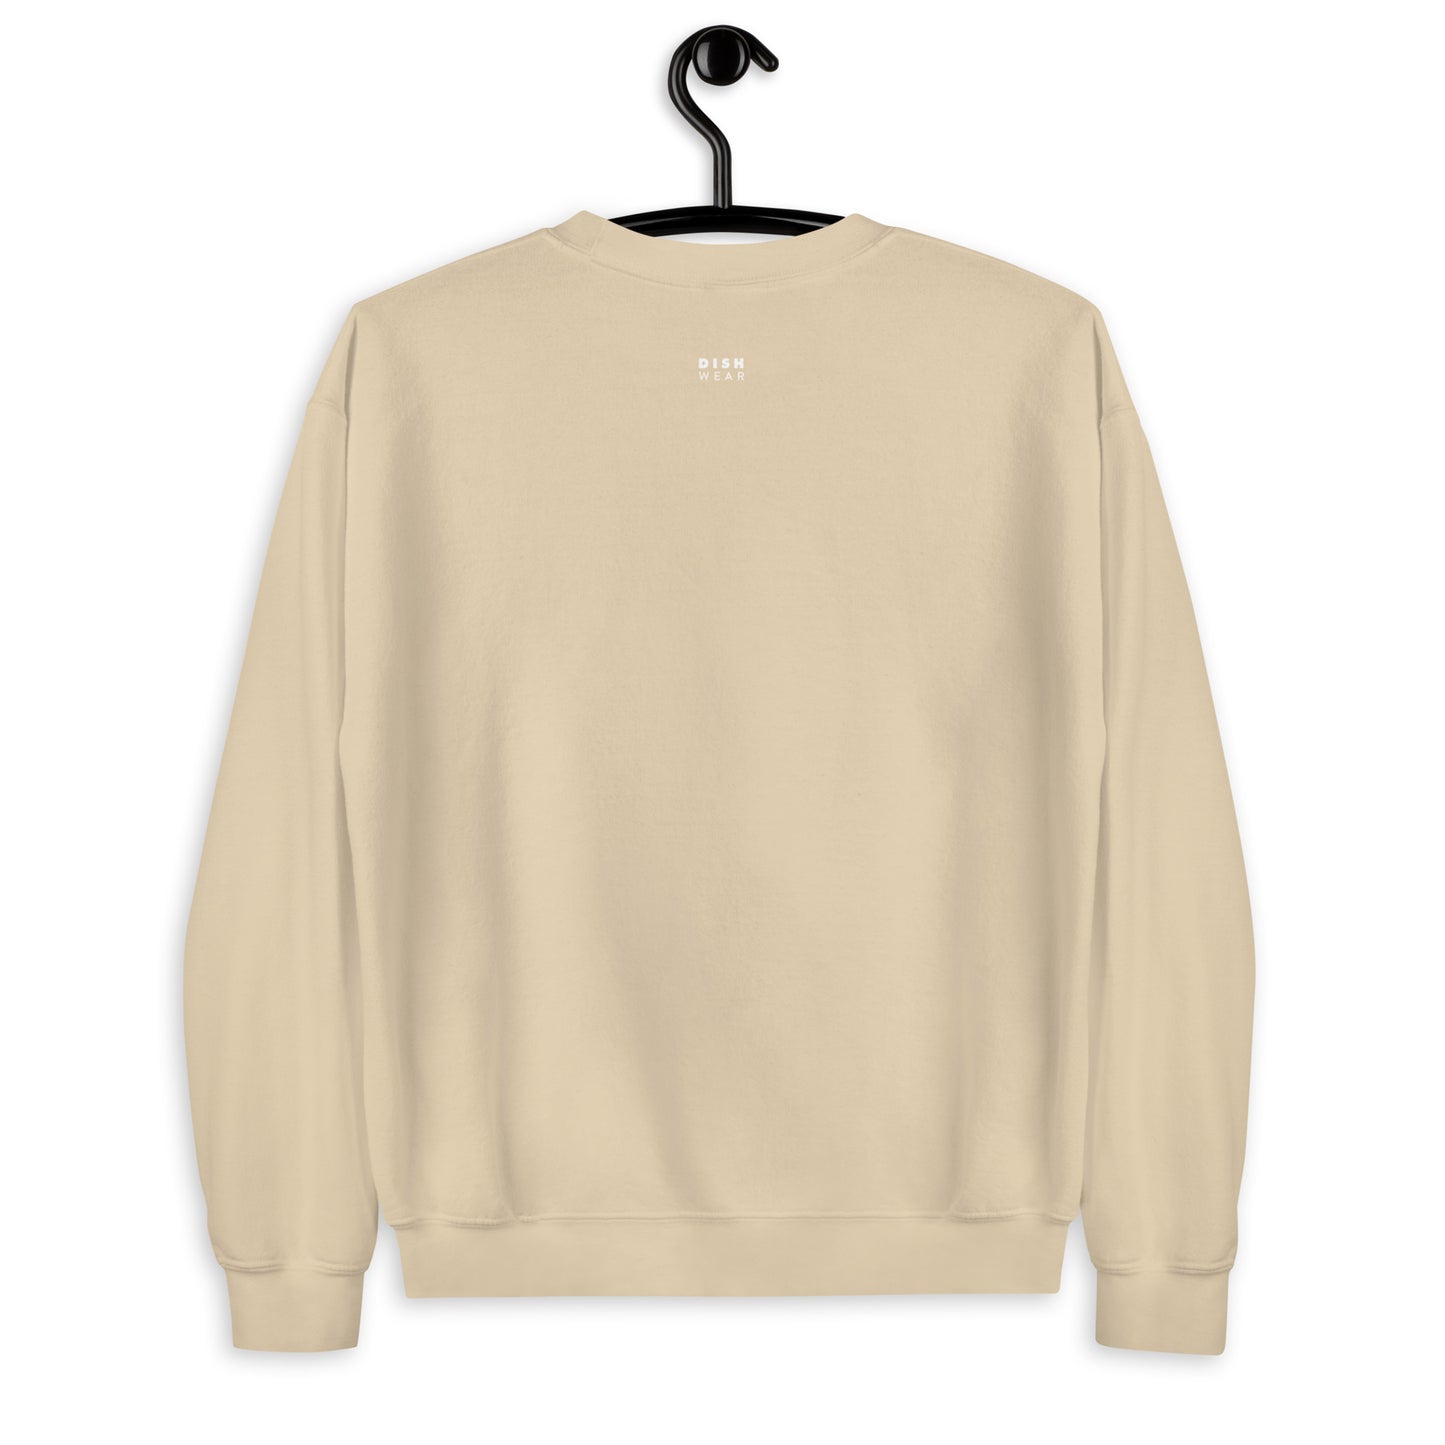 Butter Queen Sweatshirt - Straight Font